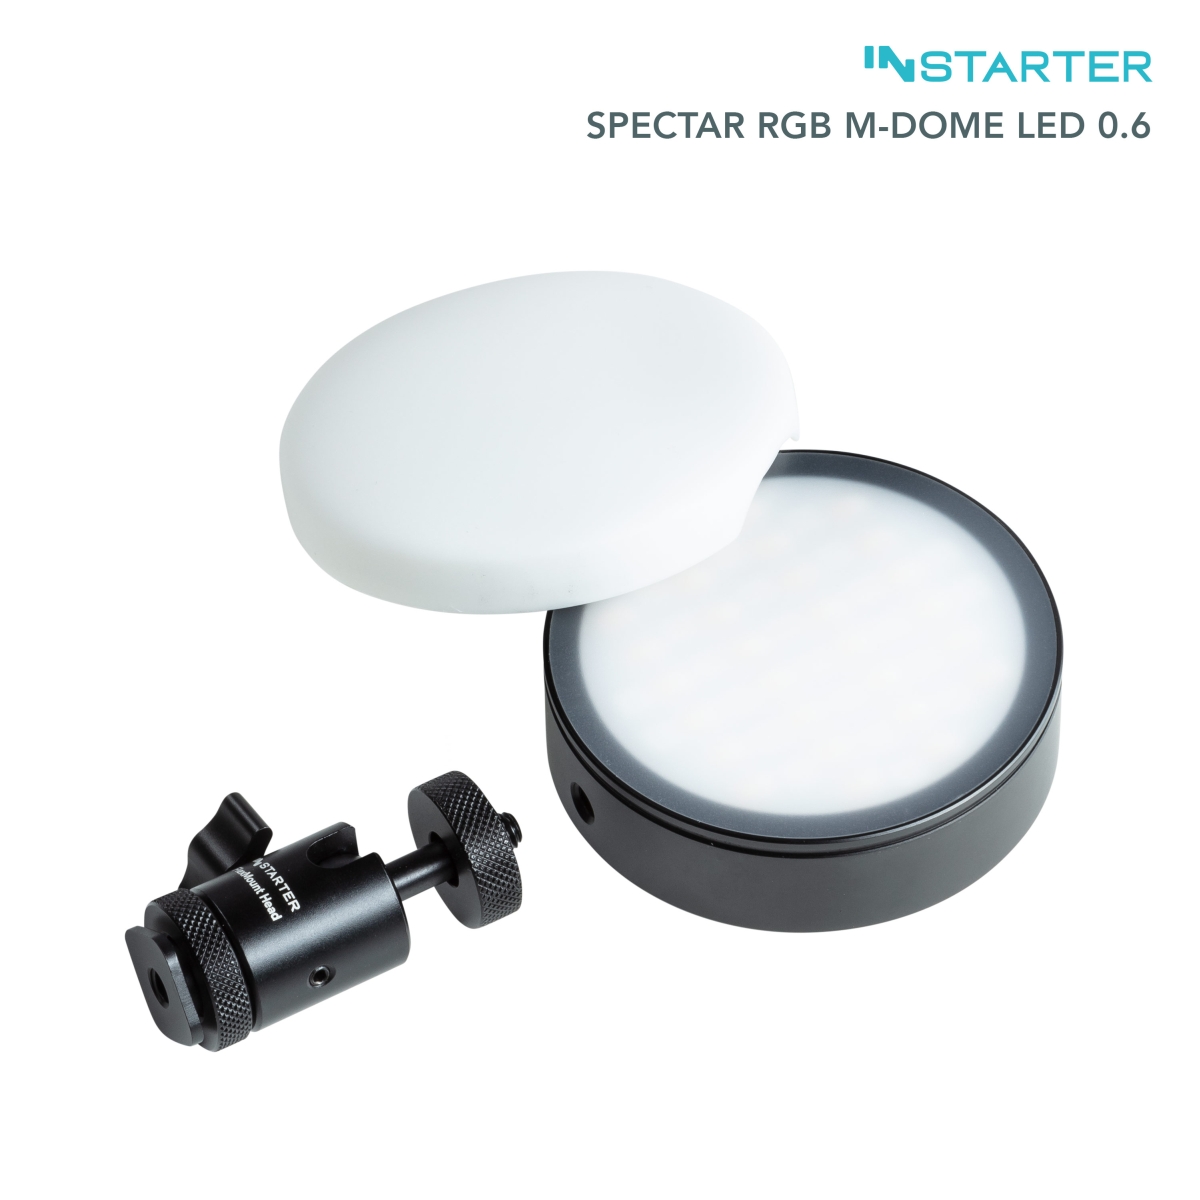 Instarter Spectar RGB M-Dome LED 0.6